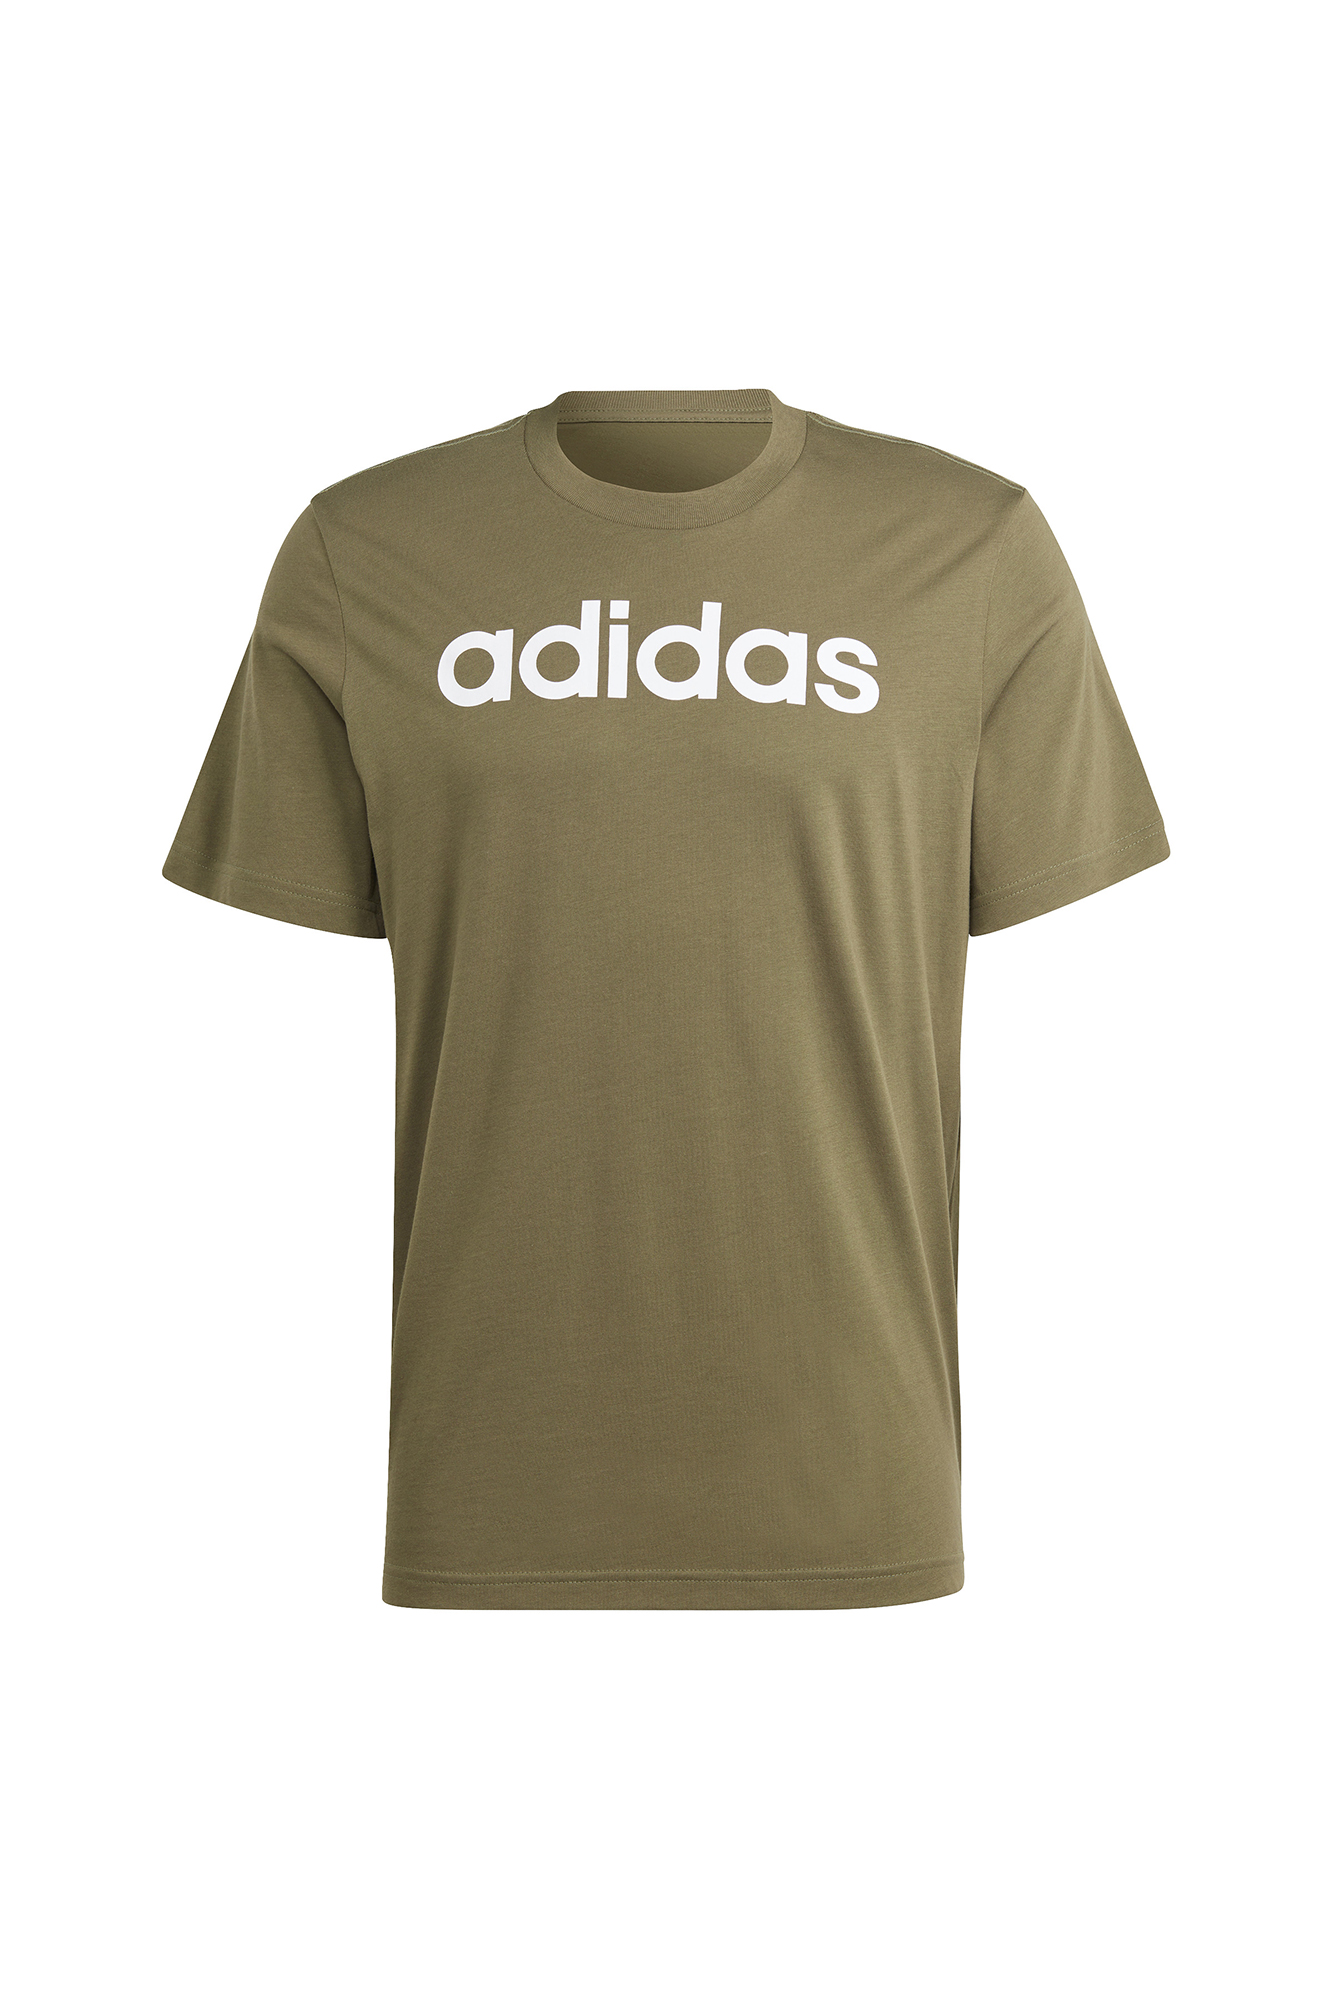 Adidas Lin T-shirt, Men's T-shirts